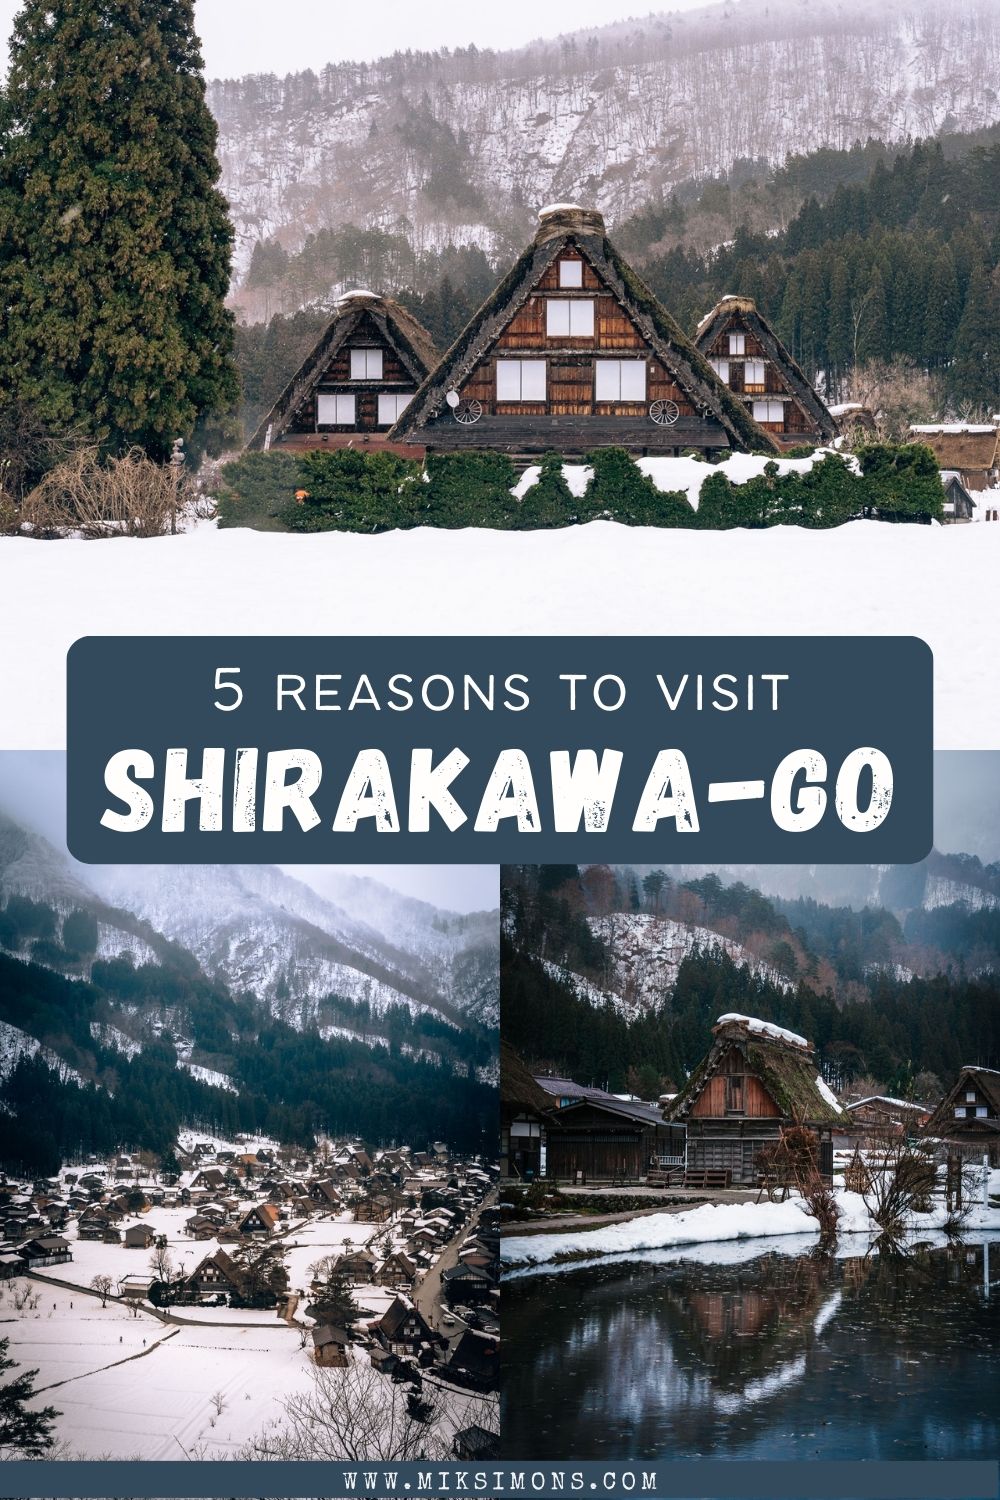 Shirakawa-go in Japan - 5 great reasons to visit this fairytale village3